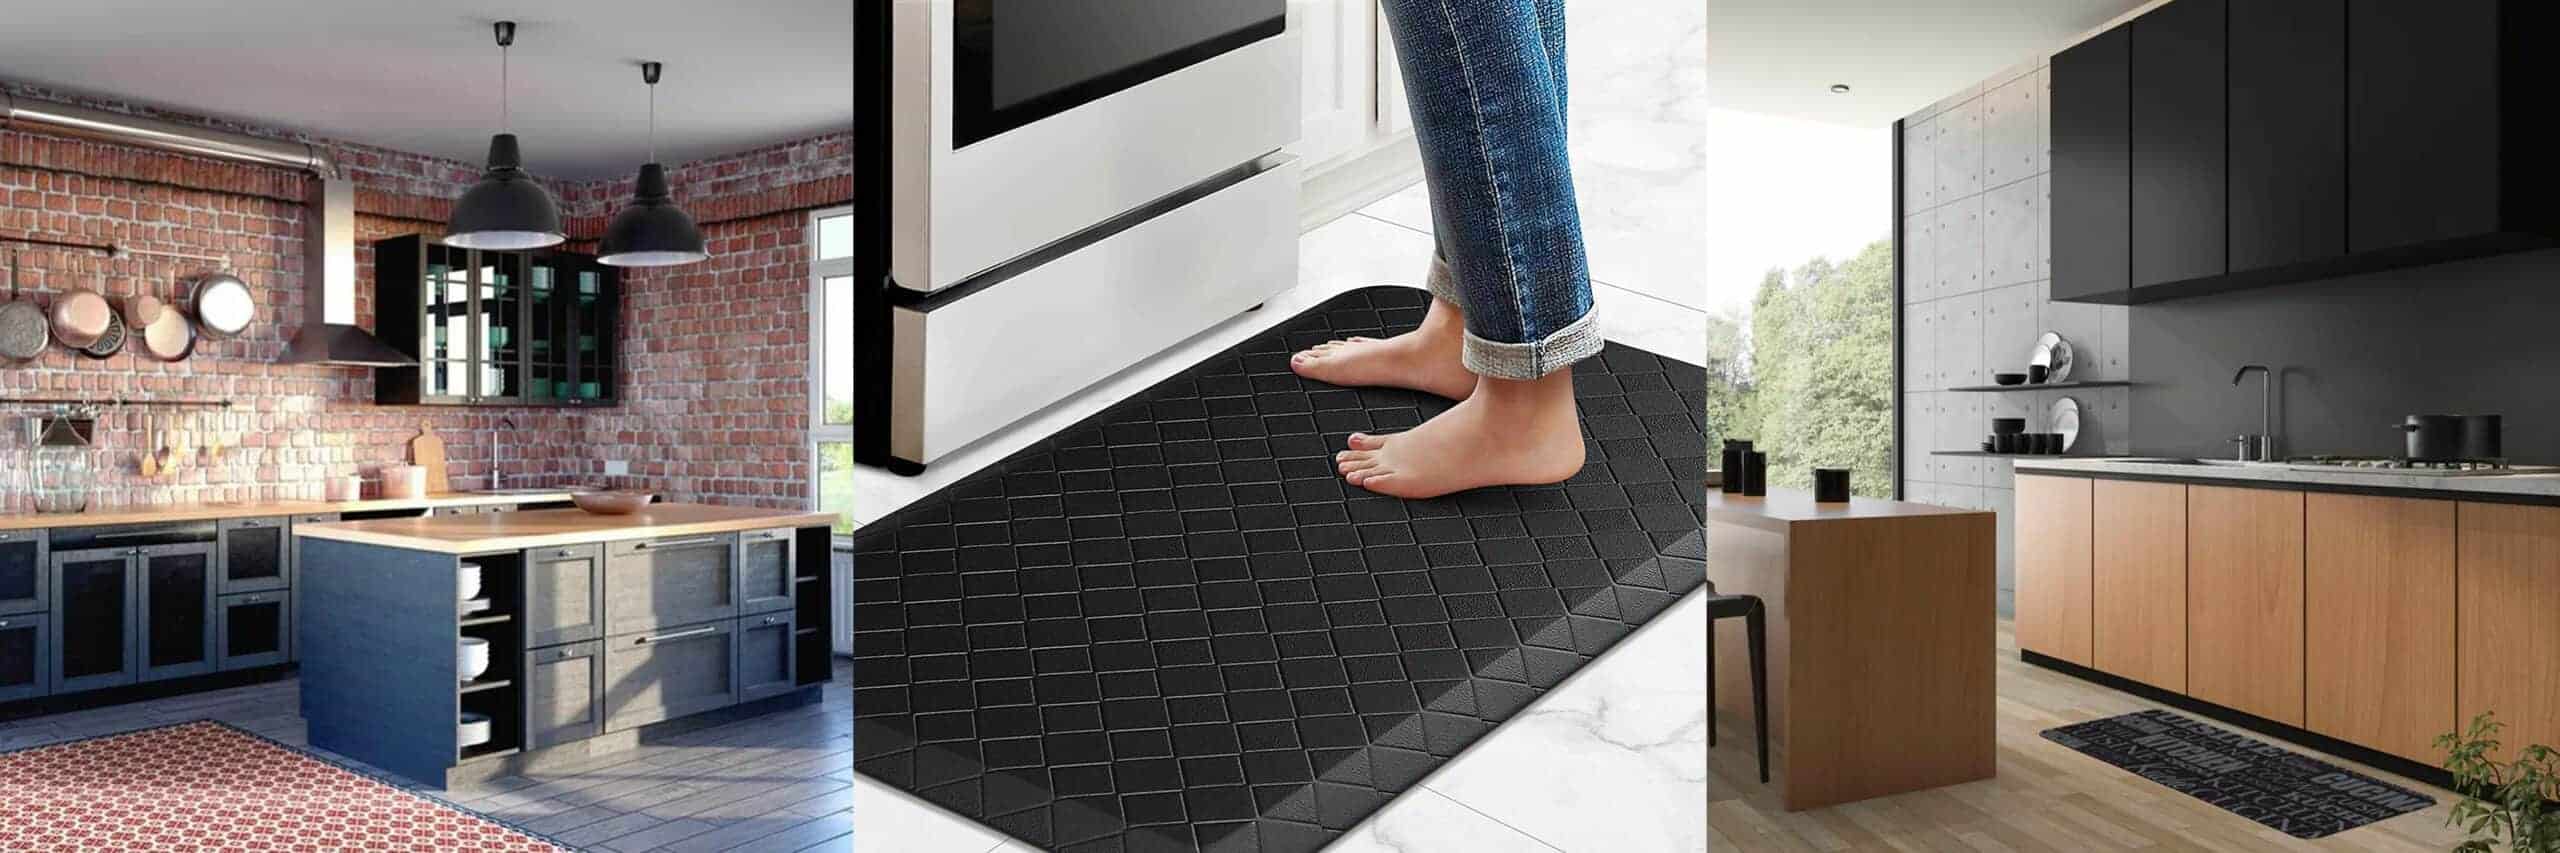 Kitchen Mat Cushioned Anti-Fatigue Floor Mat Waterproof Non-Slip Standing  Mat Ergonomic Comfort Floor Mat Rug for Home,Office,Sink,Laundry,Desk  30(L) x 20(W),Grey 